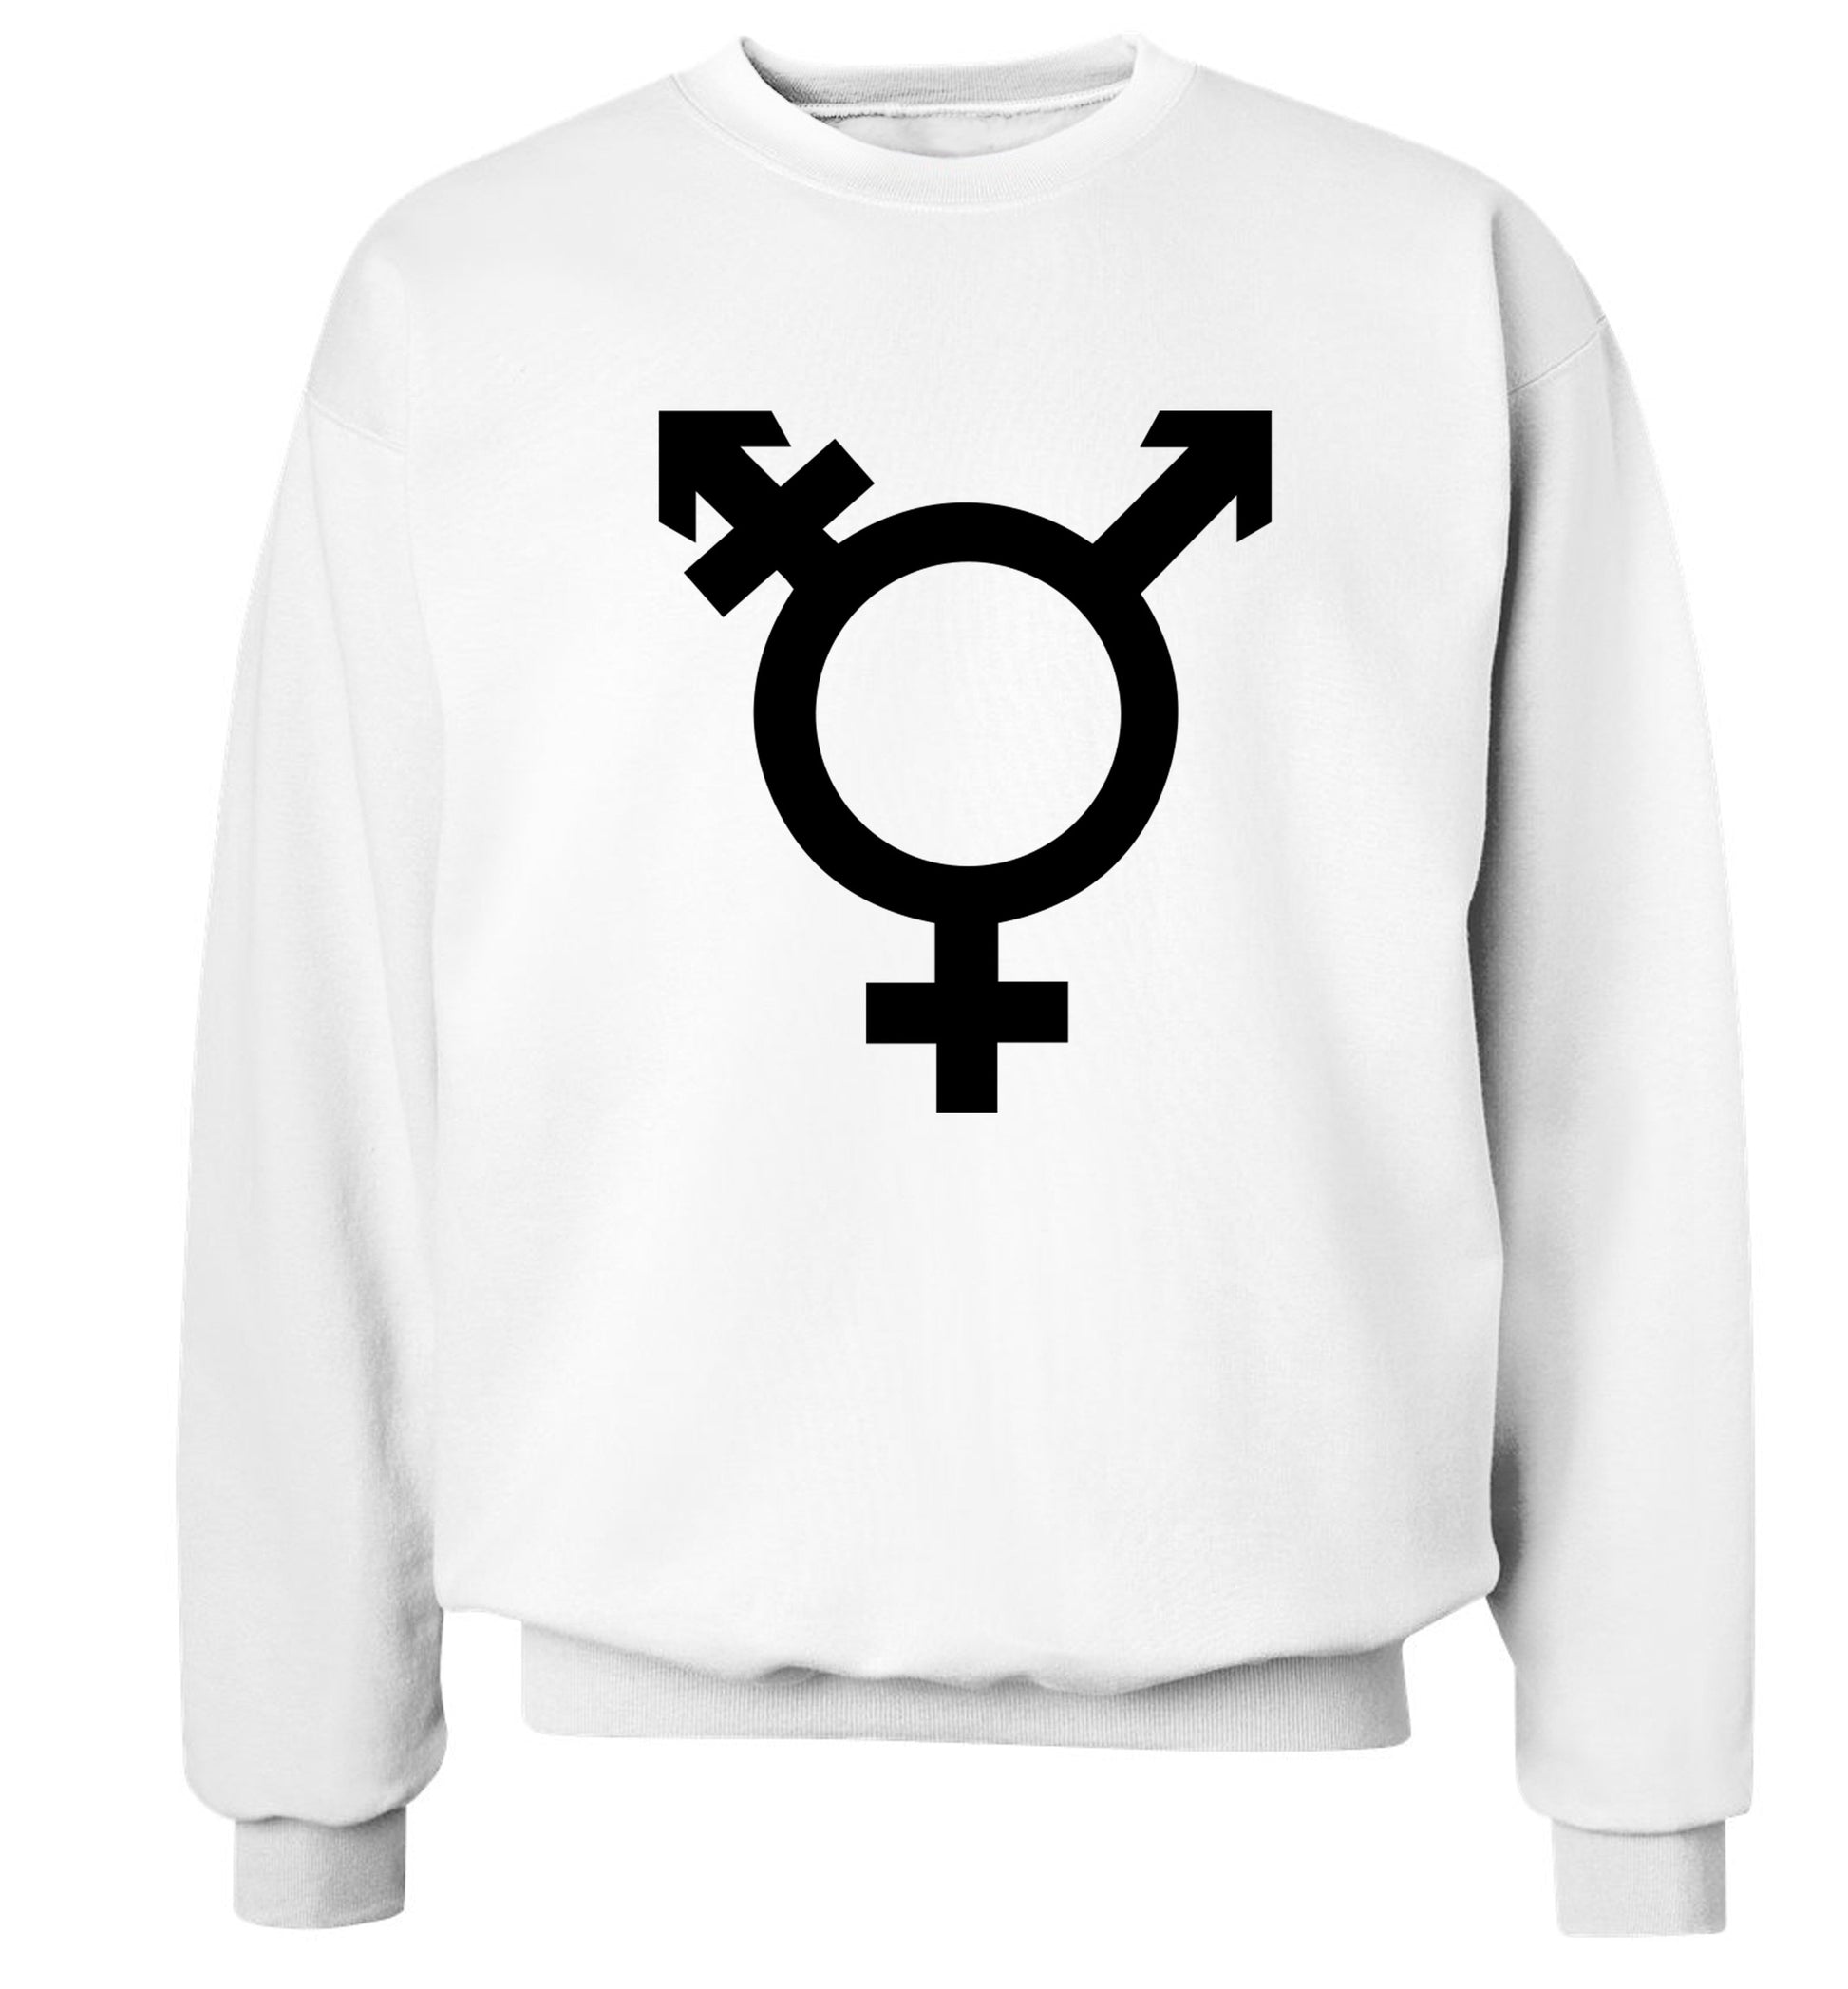 Gender neutral symbol large Adult's unisex white Sweater 2XL